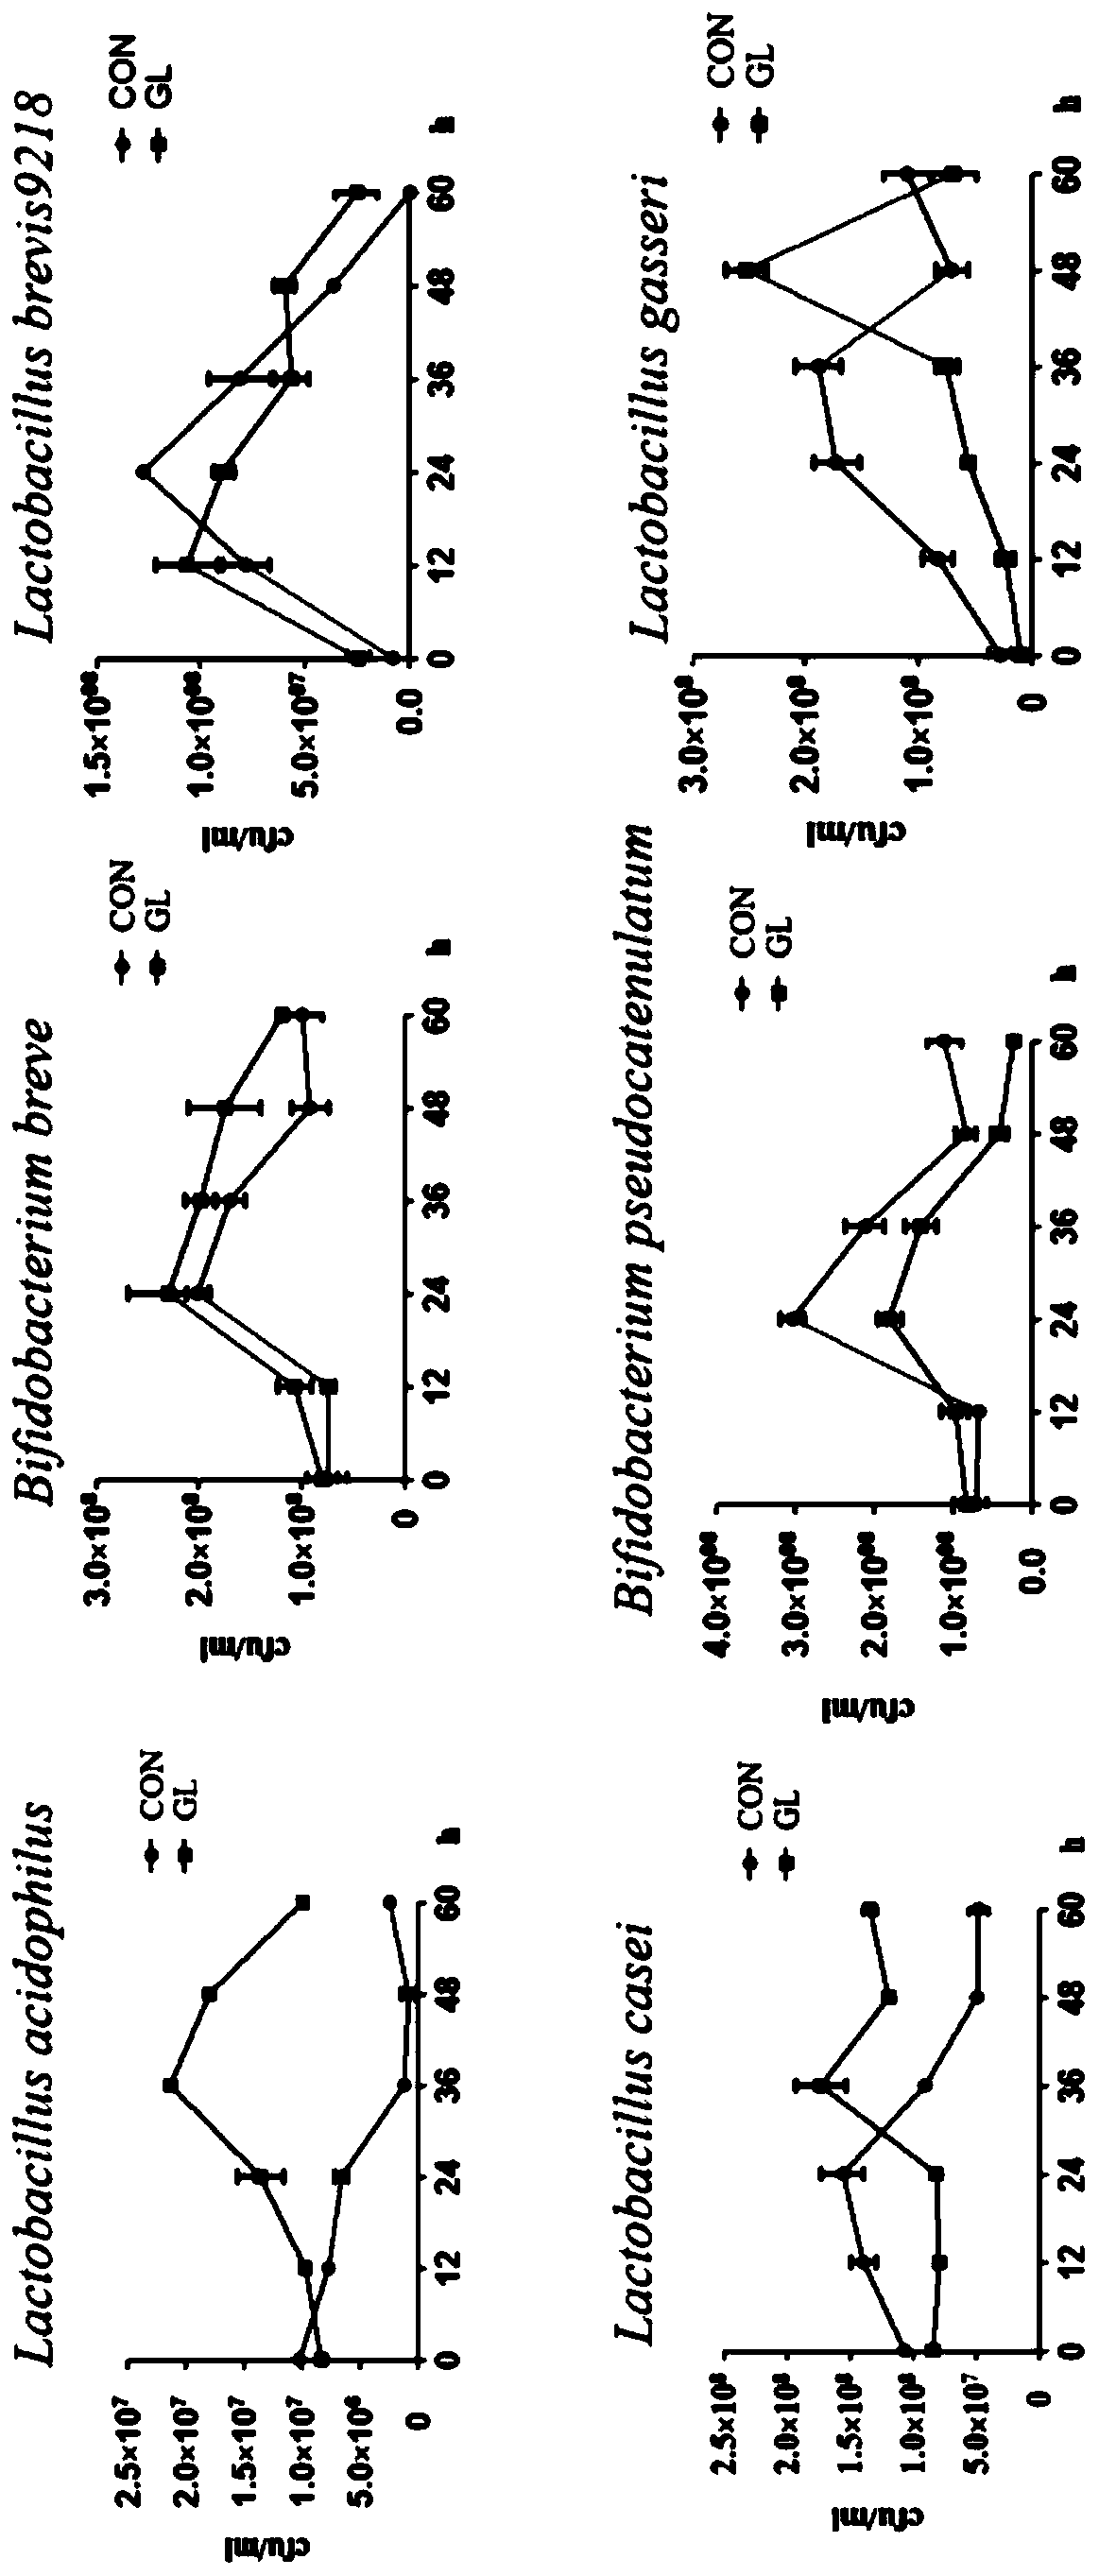 Ganoderma lucidum fruiting body composite probiotic preparation for enhancing organism immunity